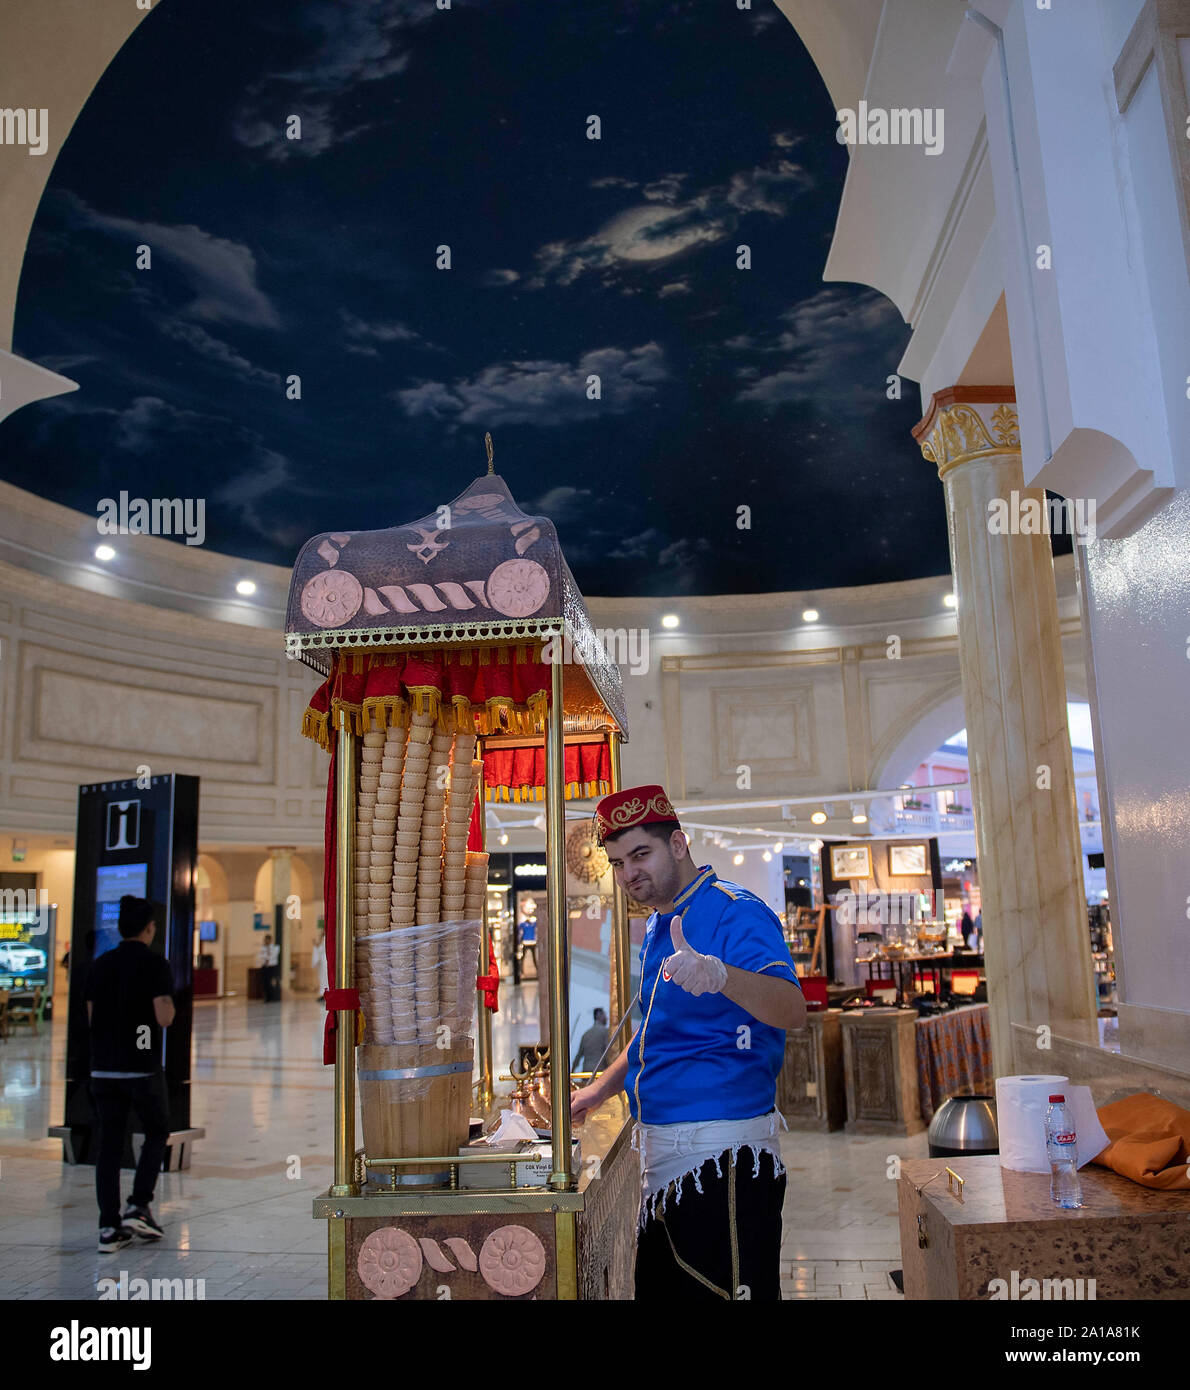 Feature, ice cream vendor at the Villagio Shopping Mall in Doha / Qatar, on 25.09.2019. | Usage worldwide Stock Photo